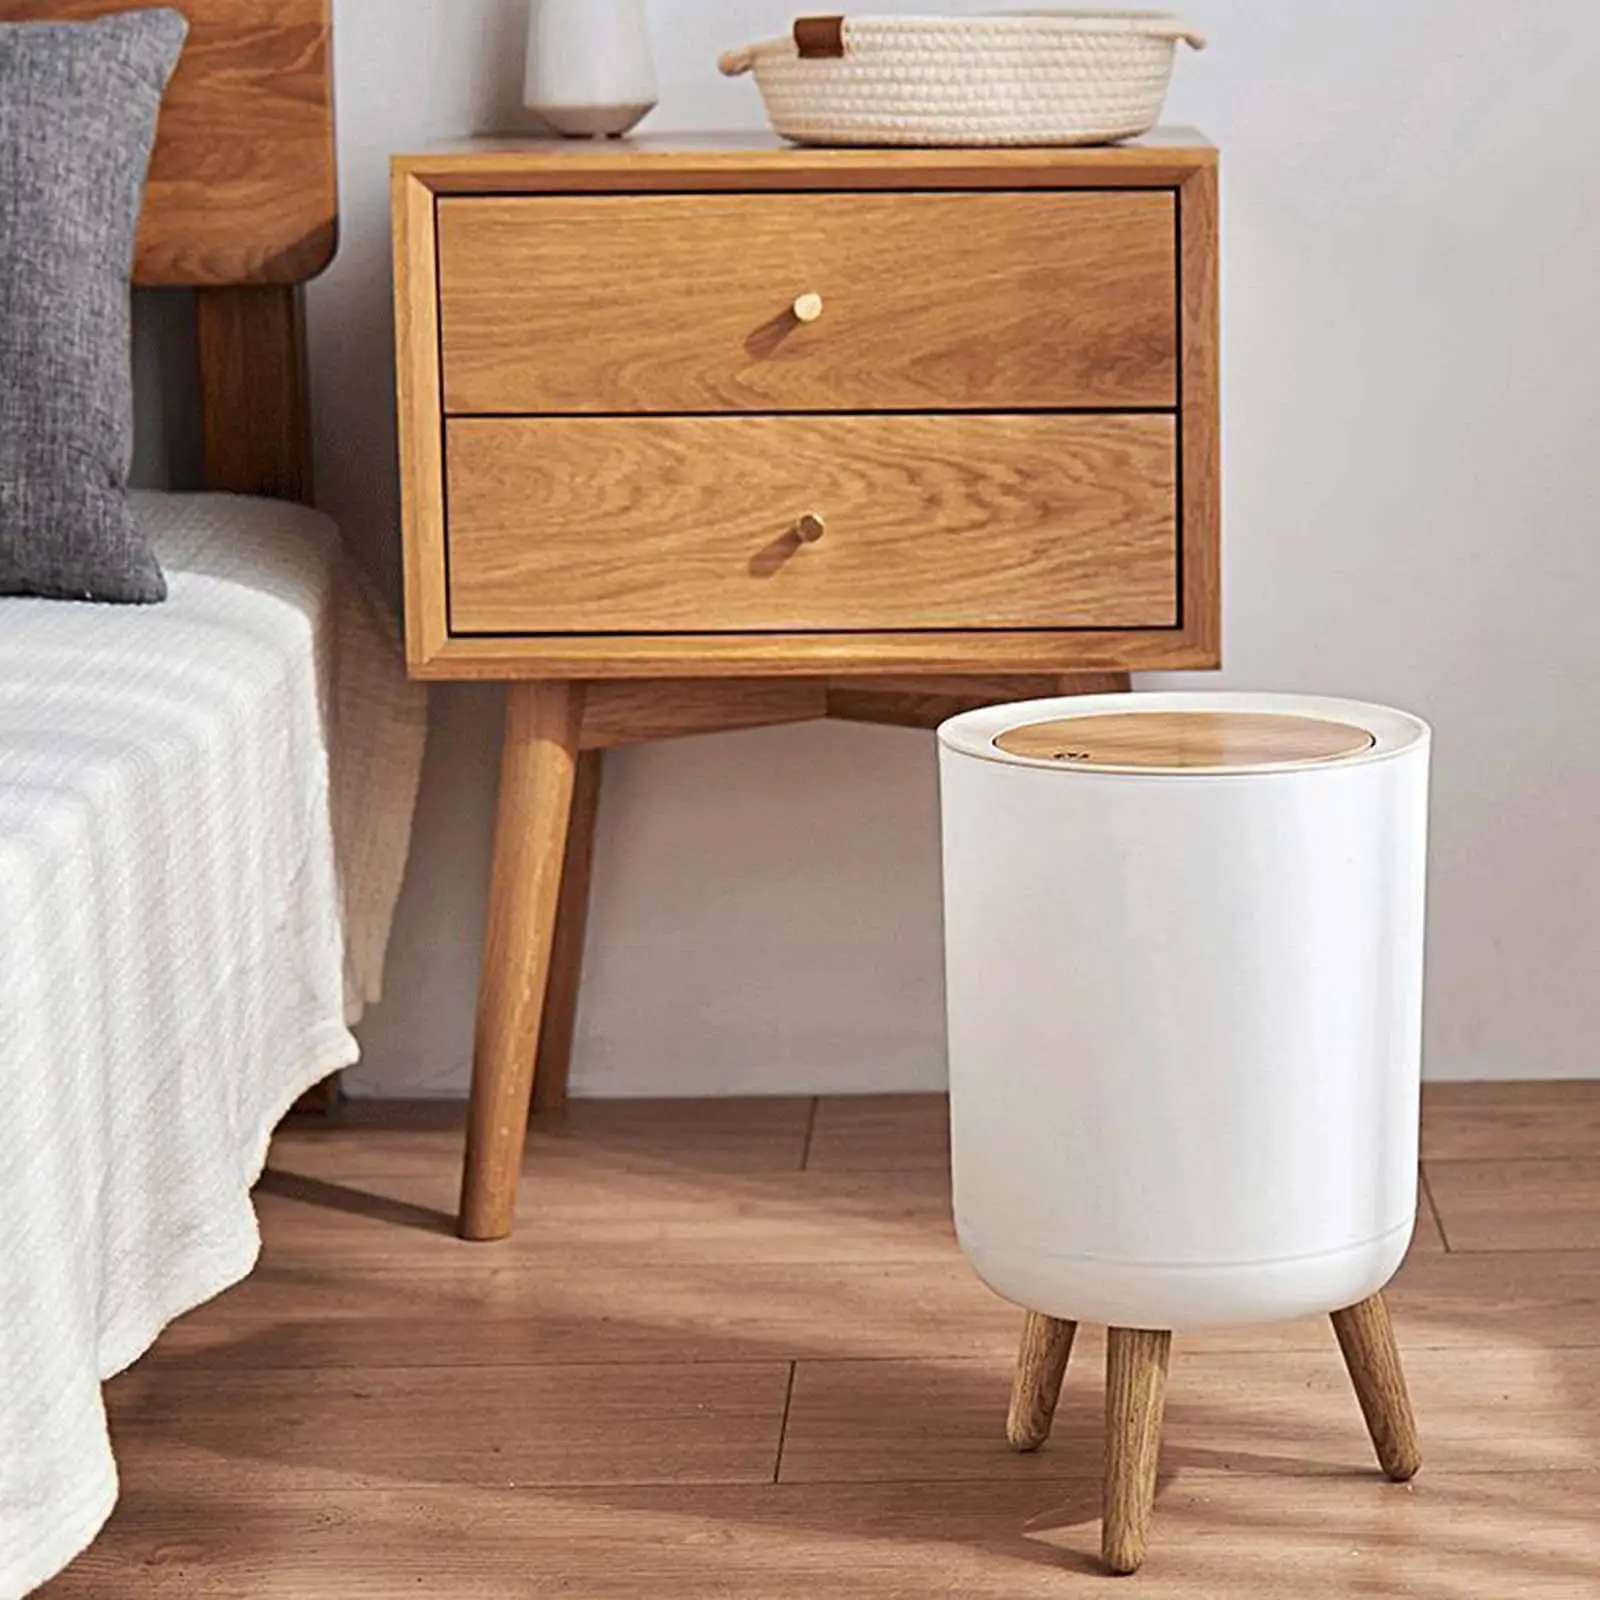 Modern Dustbin Round Desktop Press Lid Imitation Wood Grain High Foot Bathroom Bedroom Kitchen Office Garbage Basket Waste Bin